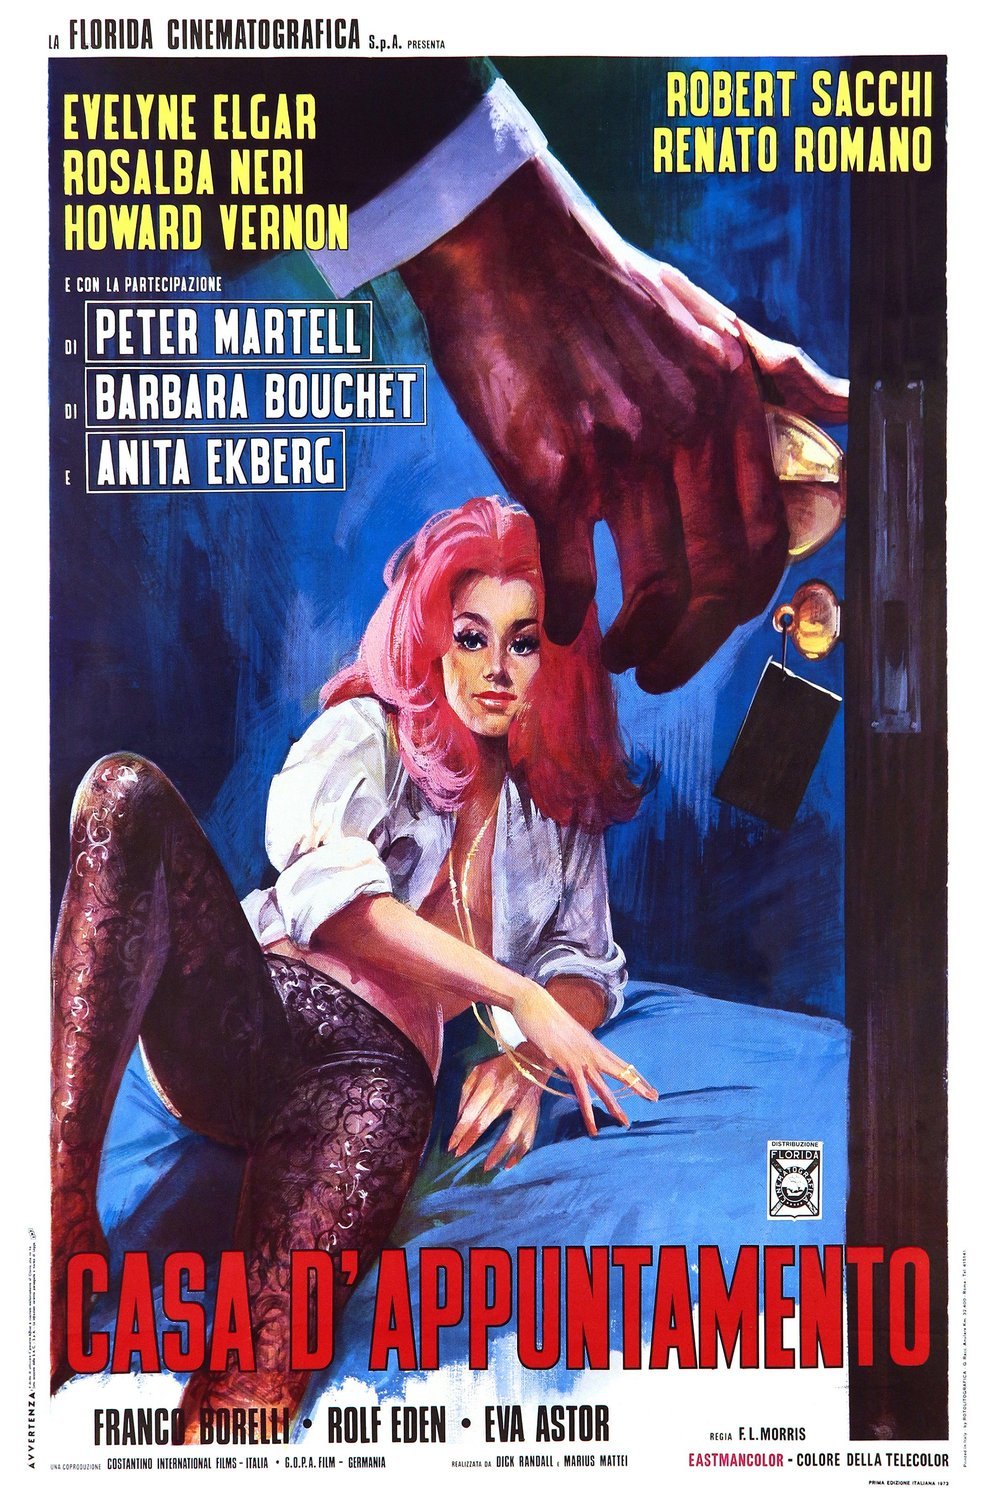 Italian poster of the movie Casa d'appuntamento